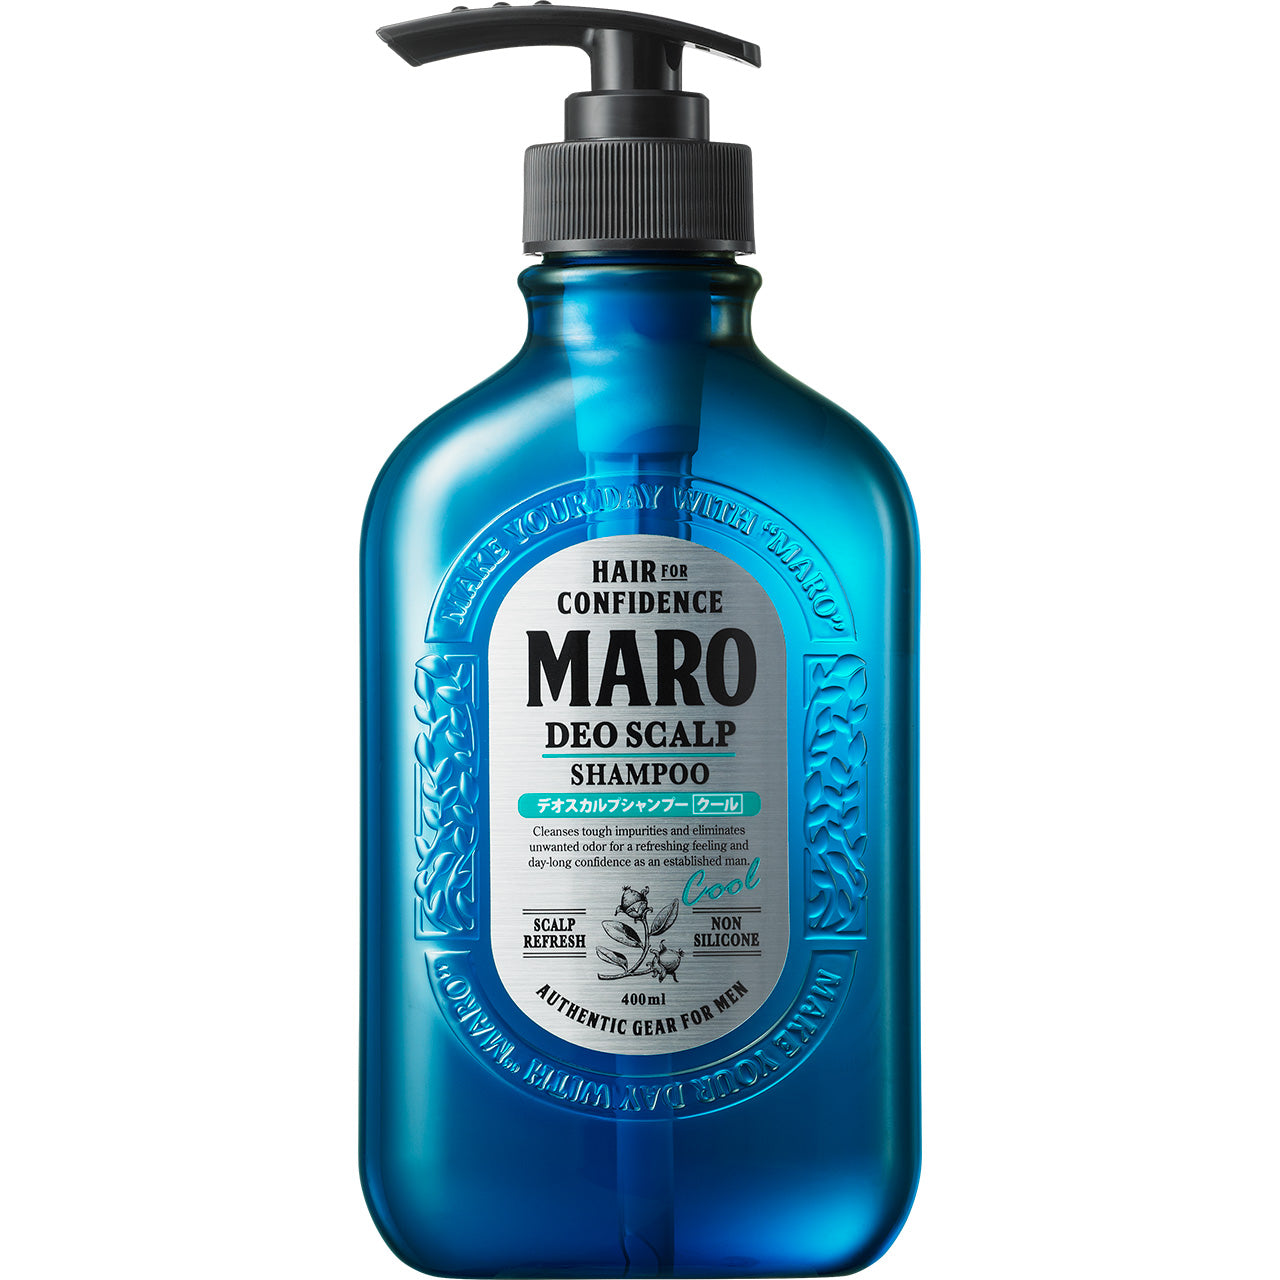 MARO Deo Scalp Cool Shampoo